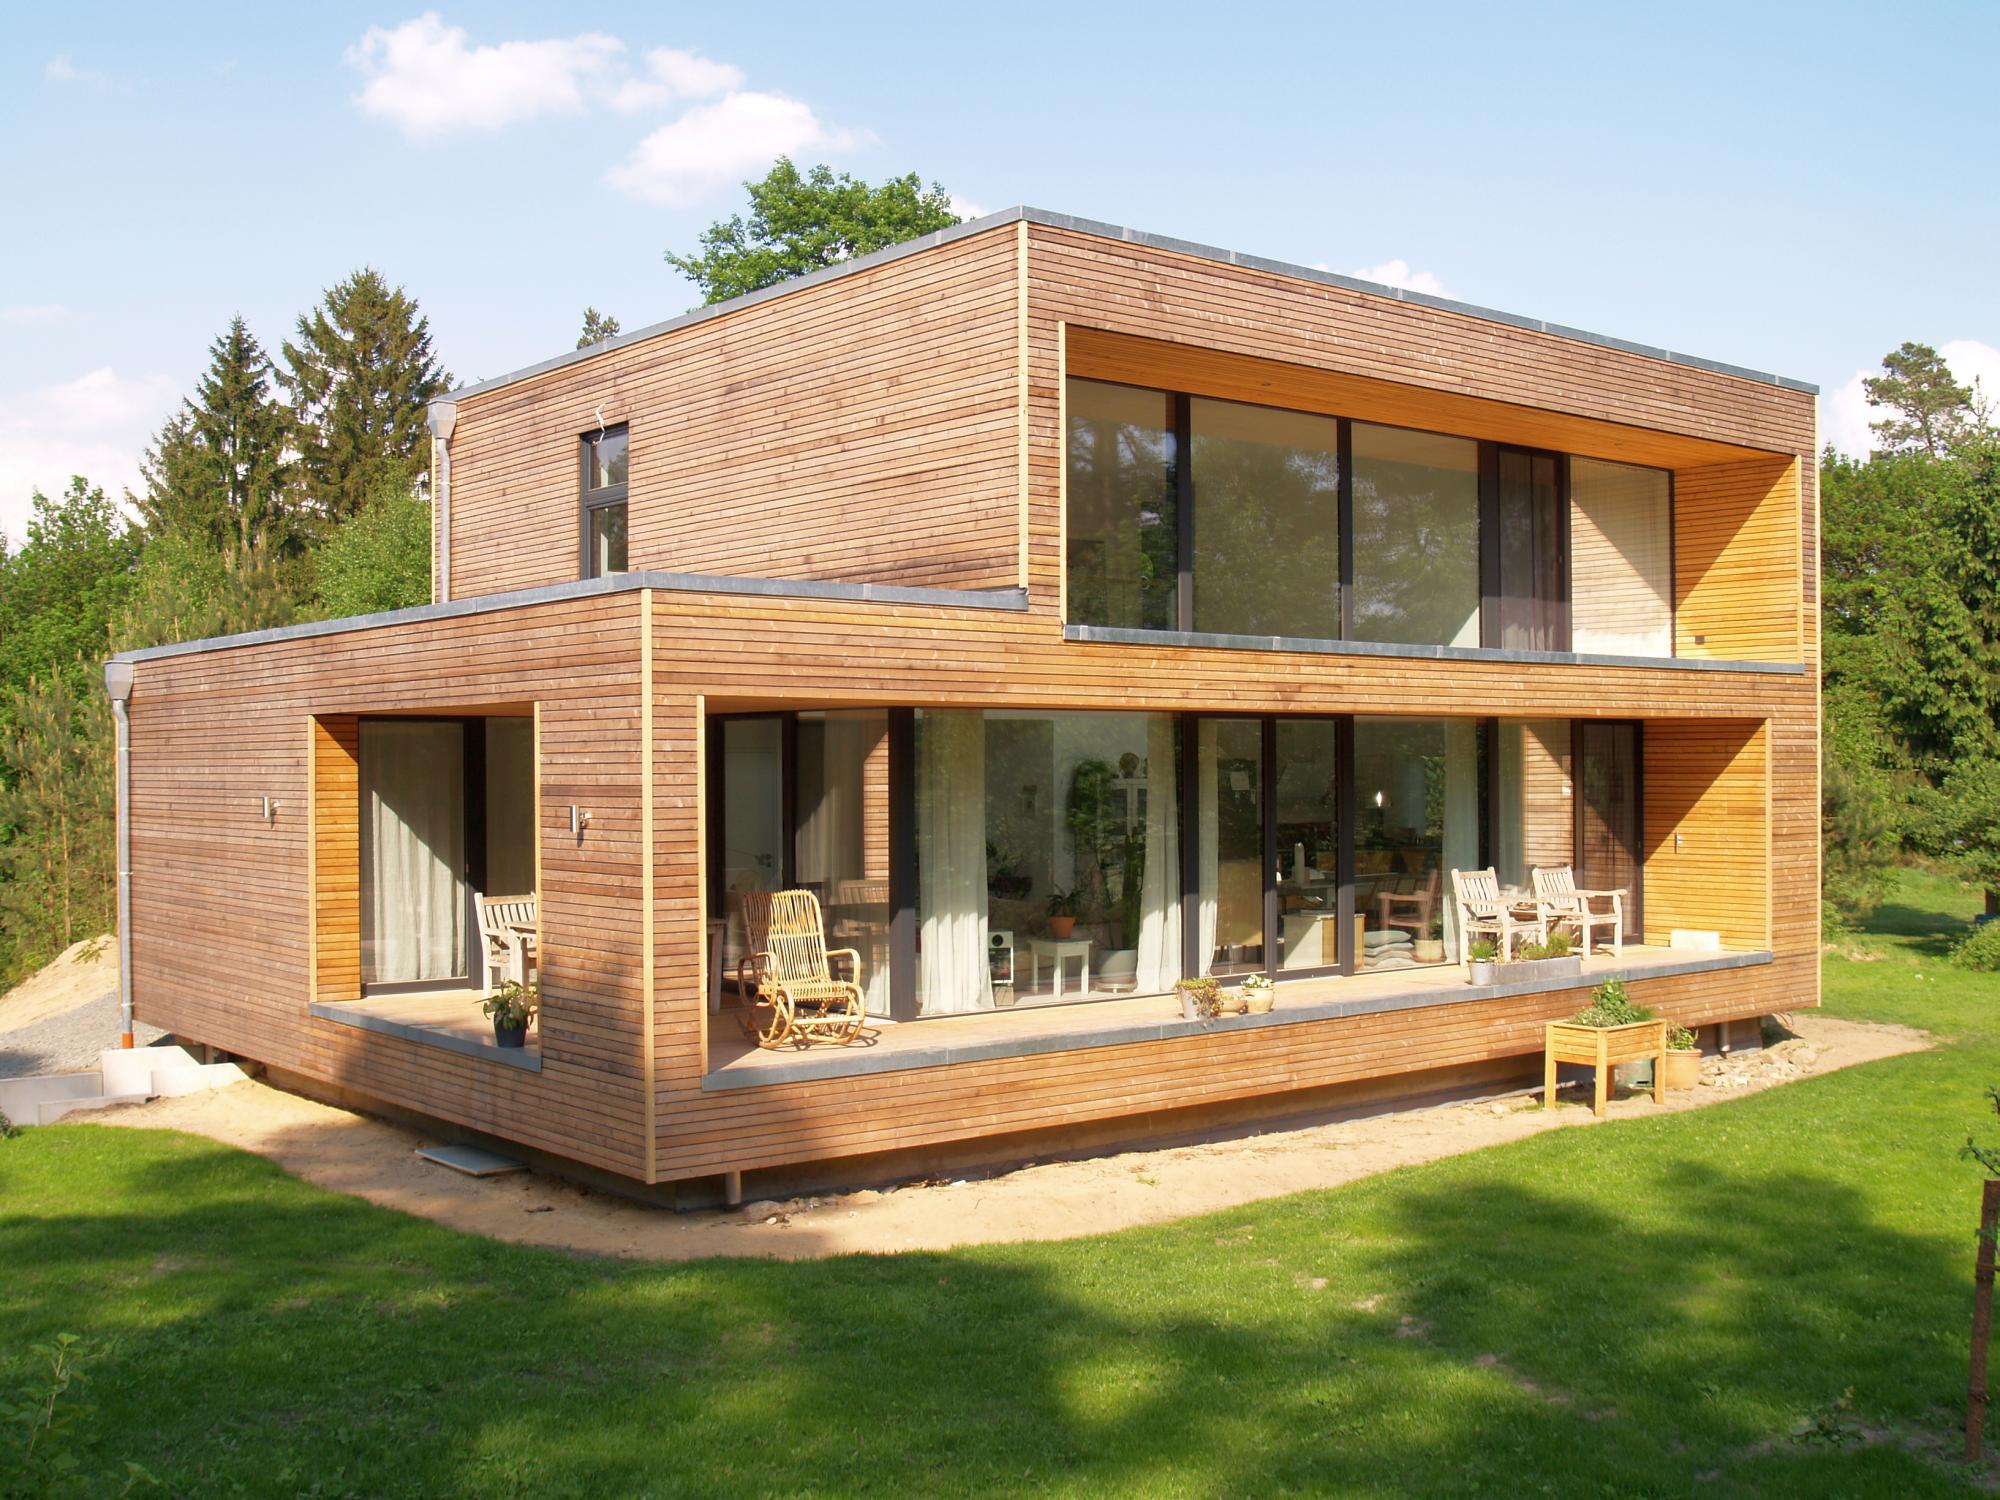 Neu Wulmstorf, Einfamilienhaus, Neubau in Holzrahmenbauweise, 2015-2017, Entwurf k_m architektur, Bregenz